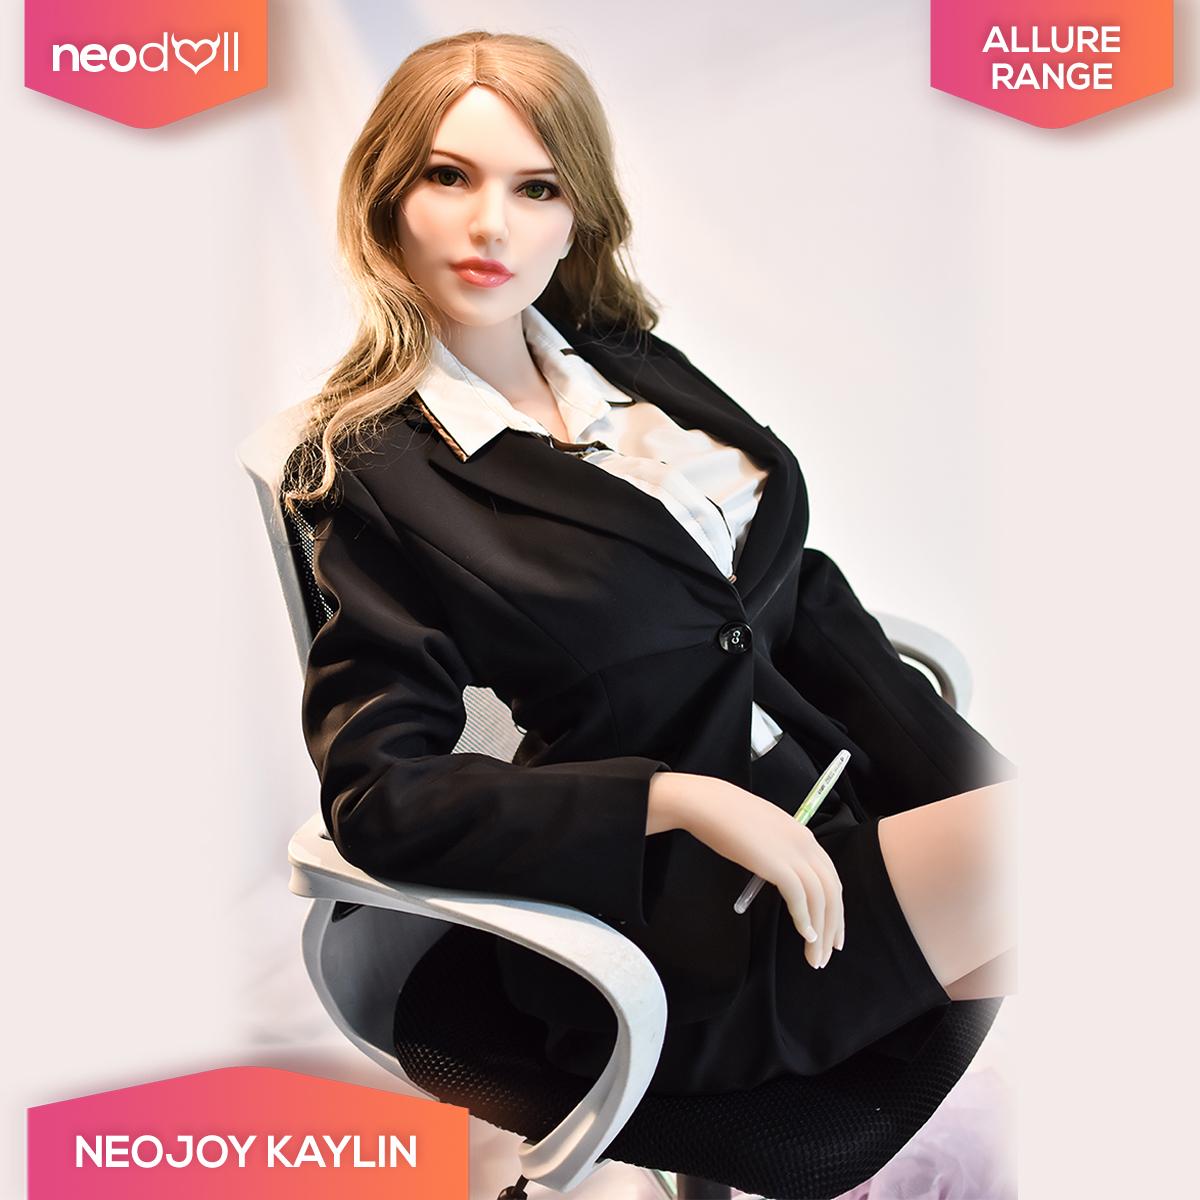 Neodoll Allure Kaylin - Realistic Sex Doll - 165cm - Natural